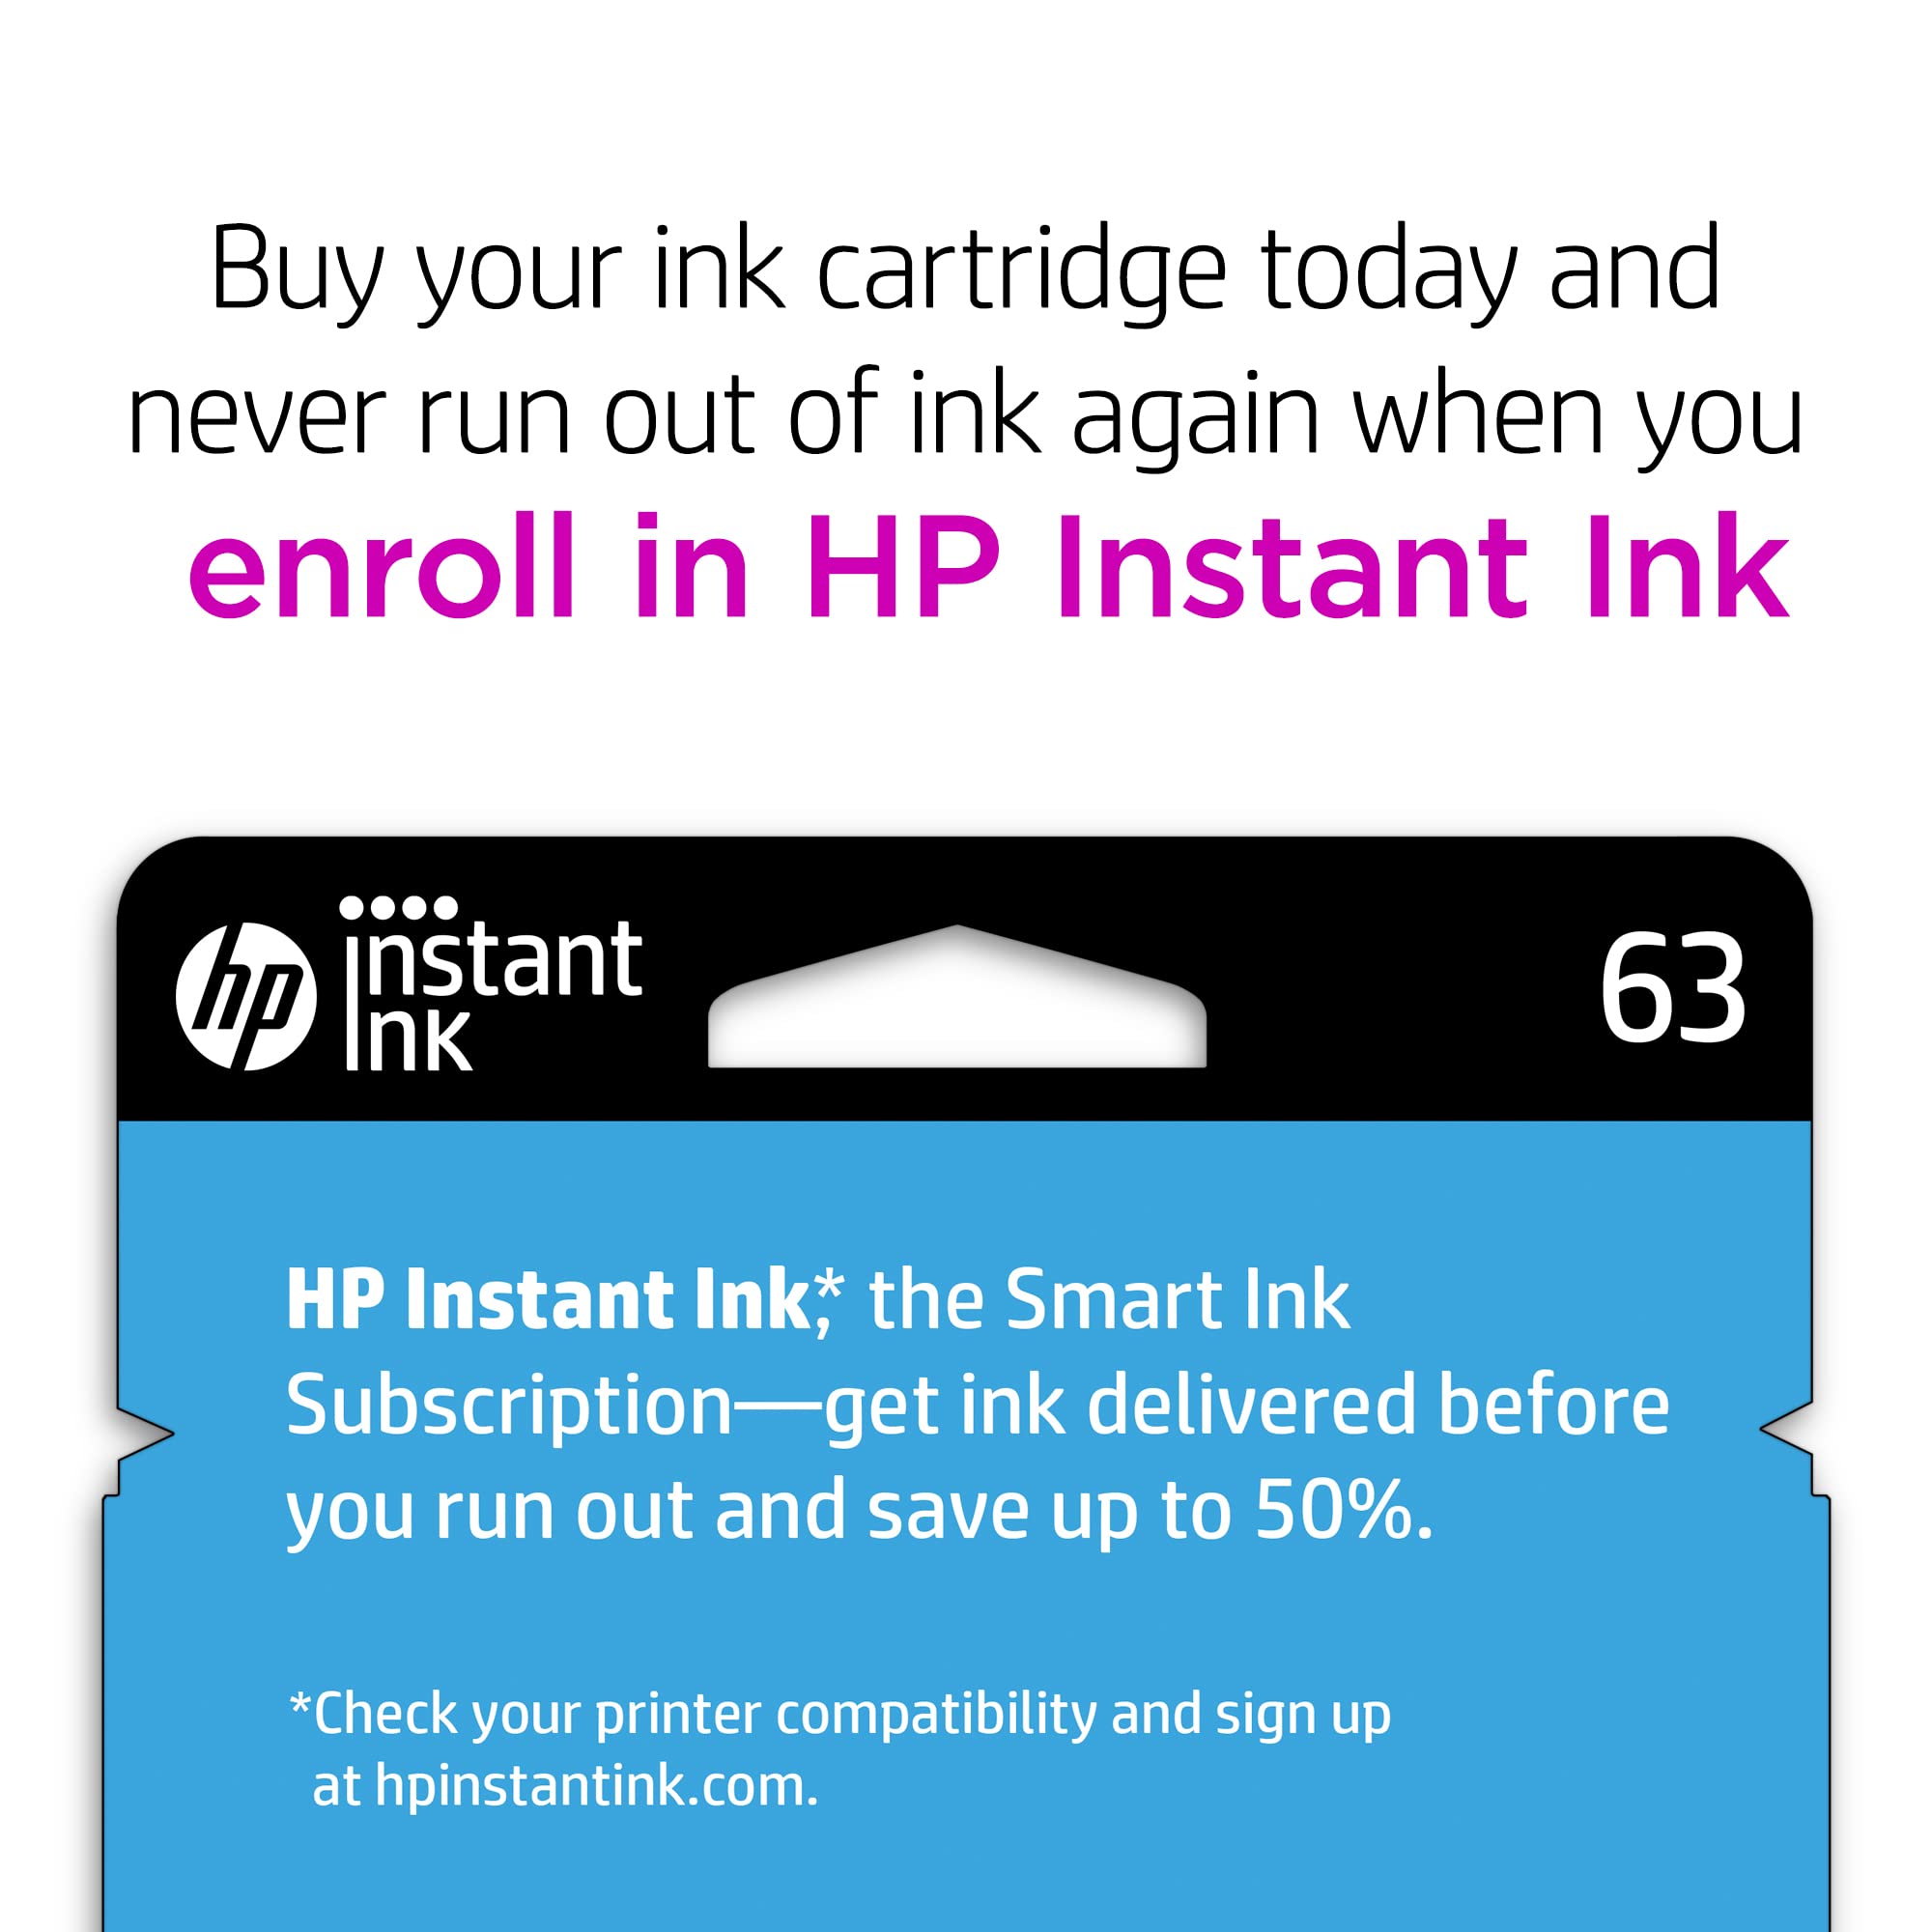 HP 63 Black Ink Cartridge | Works with HP DeskJet 1112, 2130, 3630 Series; HP ENVY 4510, 4520 Series; HP OfficeJet 3830, 4650, 5200 Series | Eligible for Instant Ink | F6U62AN